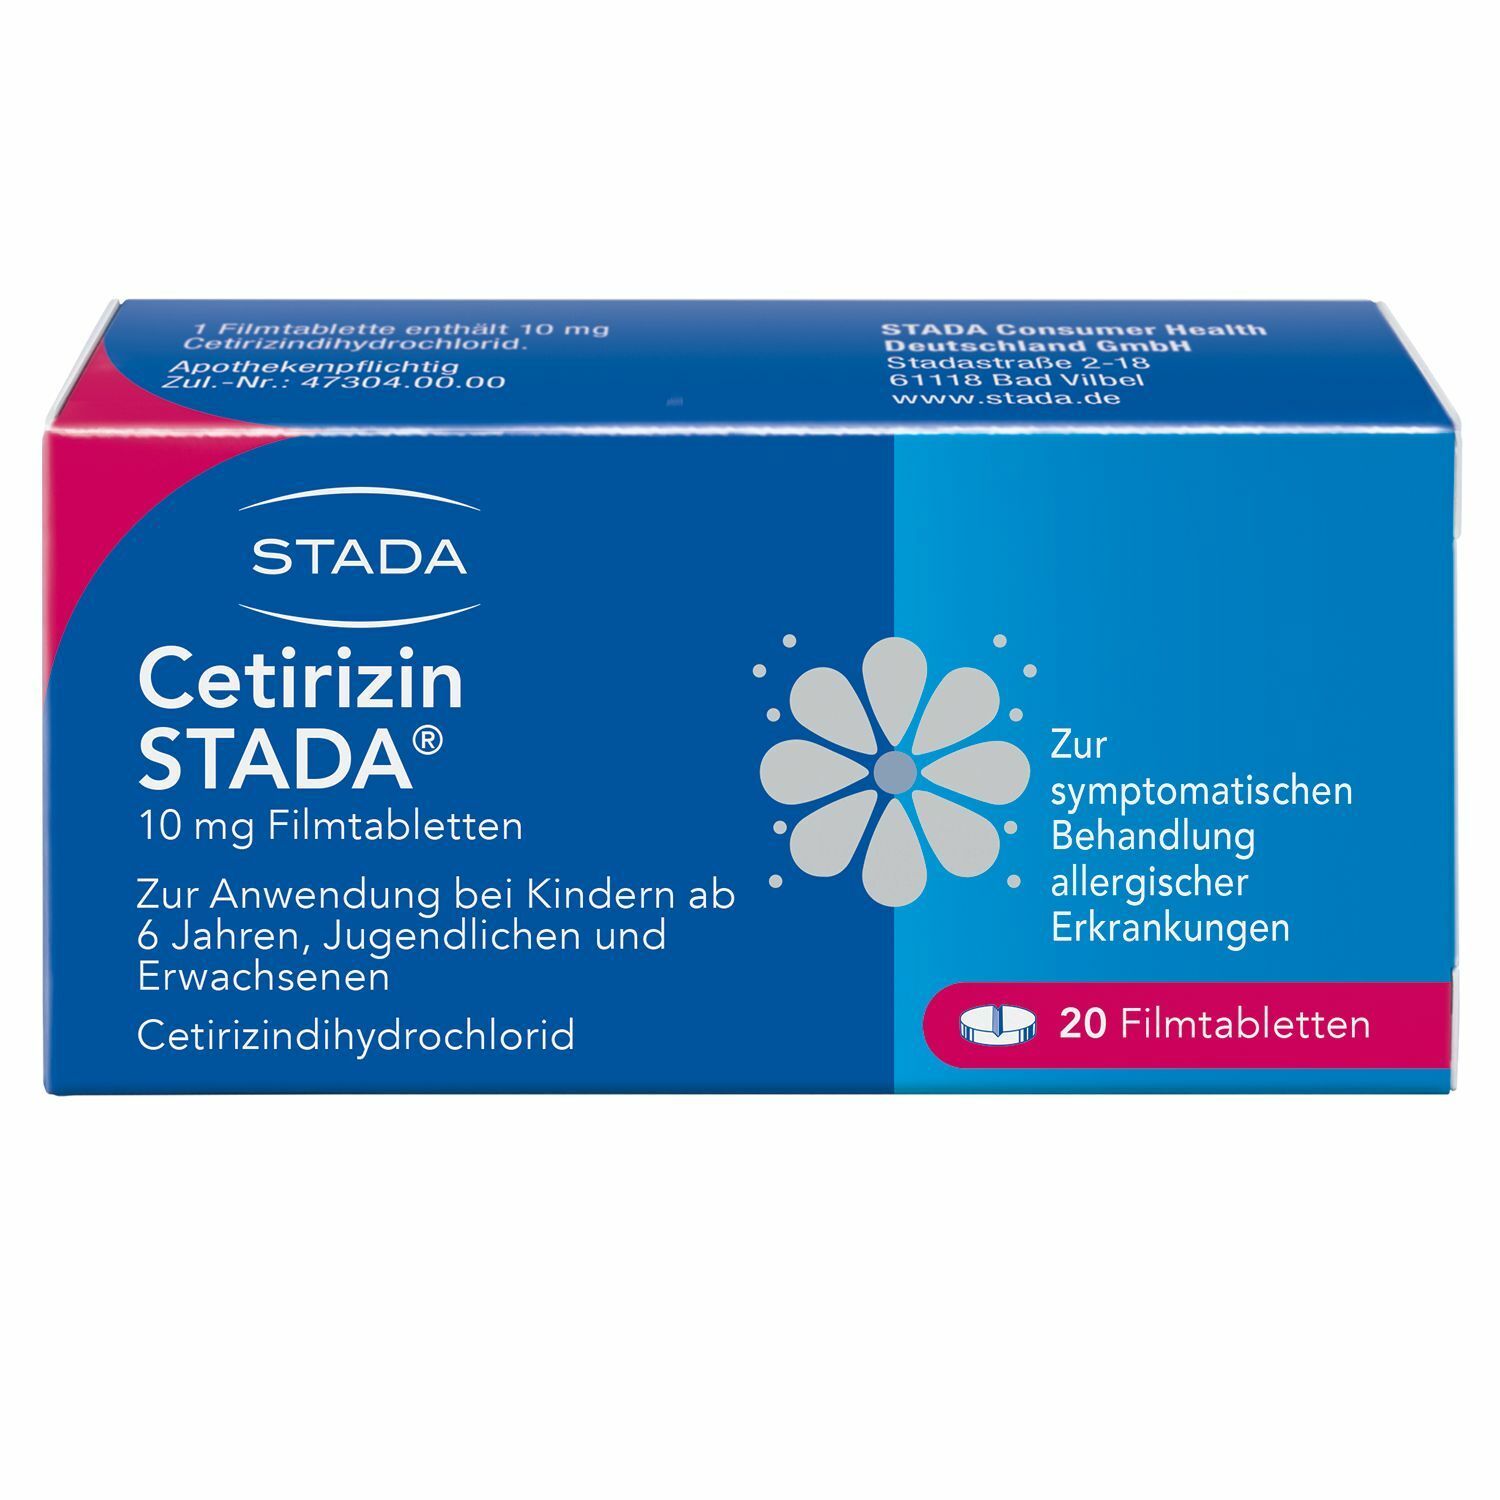 Cetirizin Stada® 10 mg Filmtabletten